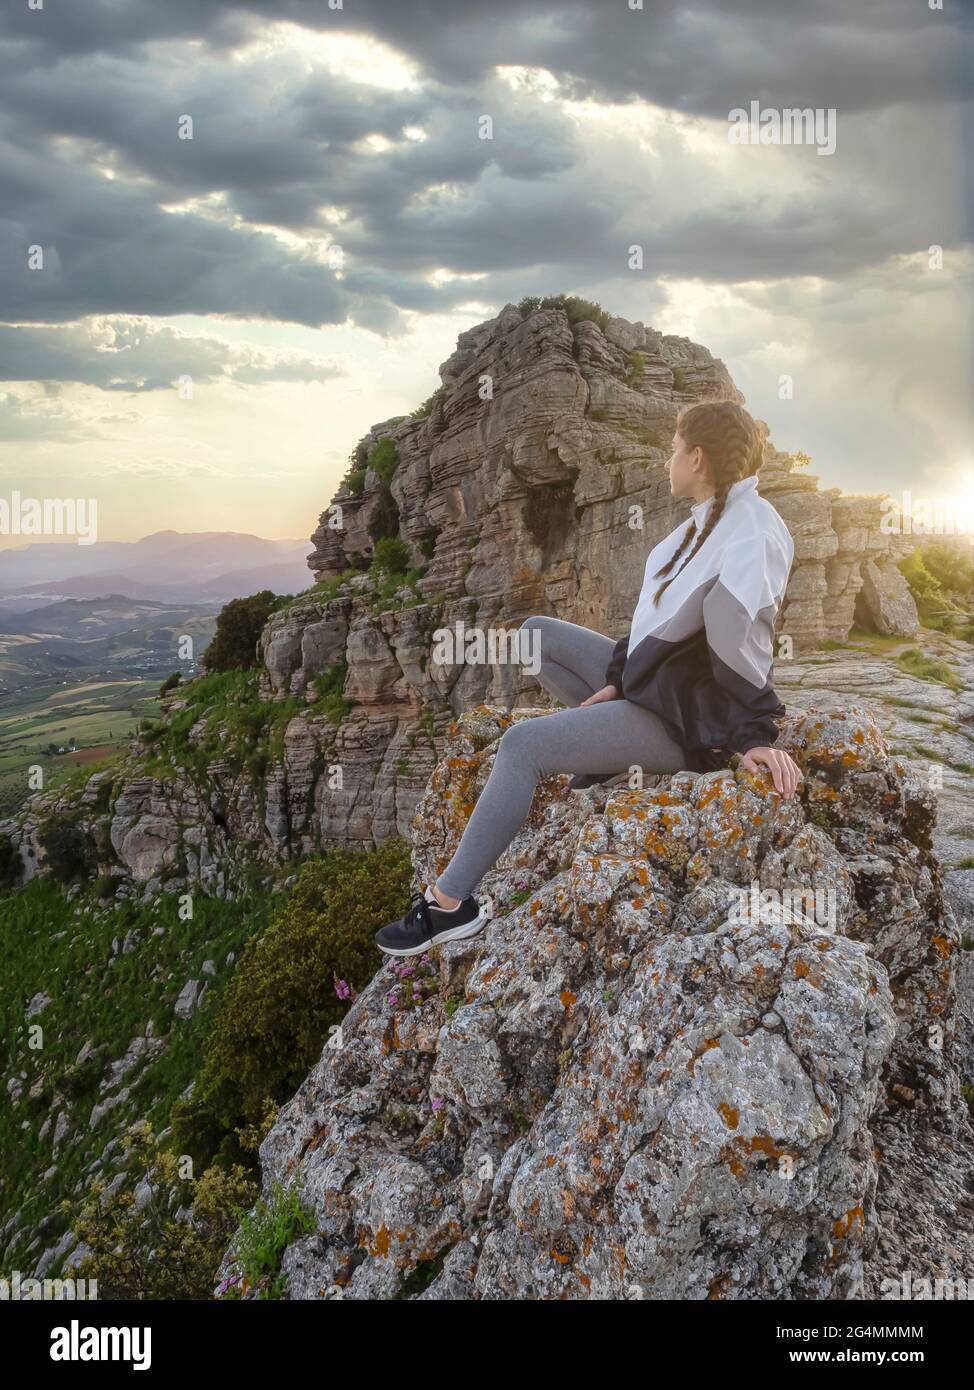 Mujer con chubasquero en el borde de un acantilado con vistas a un valle en un día lluvioso y húmedo. Imagen conceptual de tonos exteriores.Torcal de Antequera,España. Foto de stock